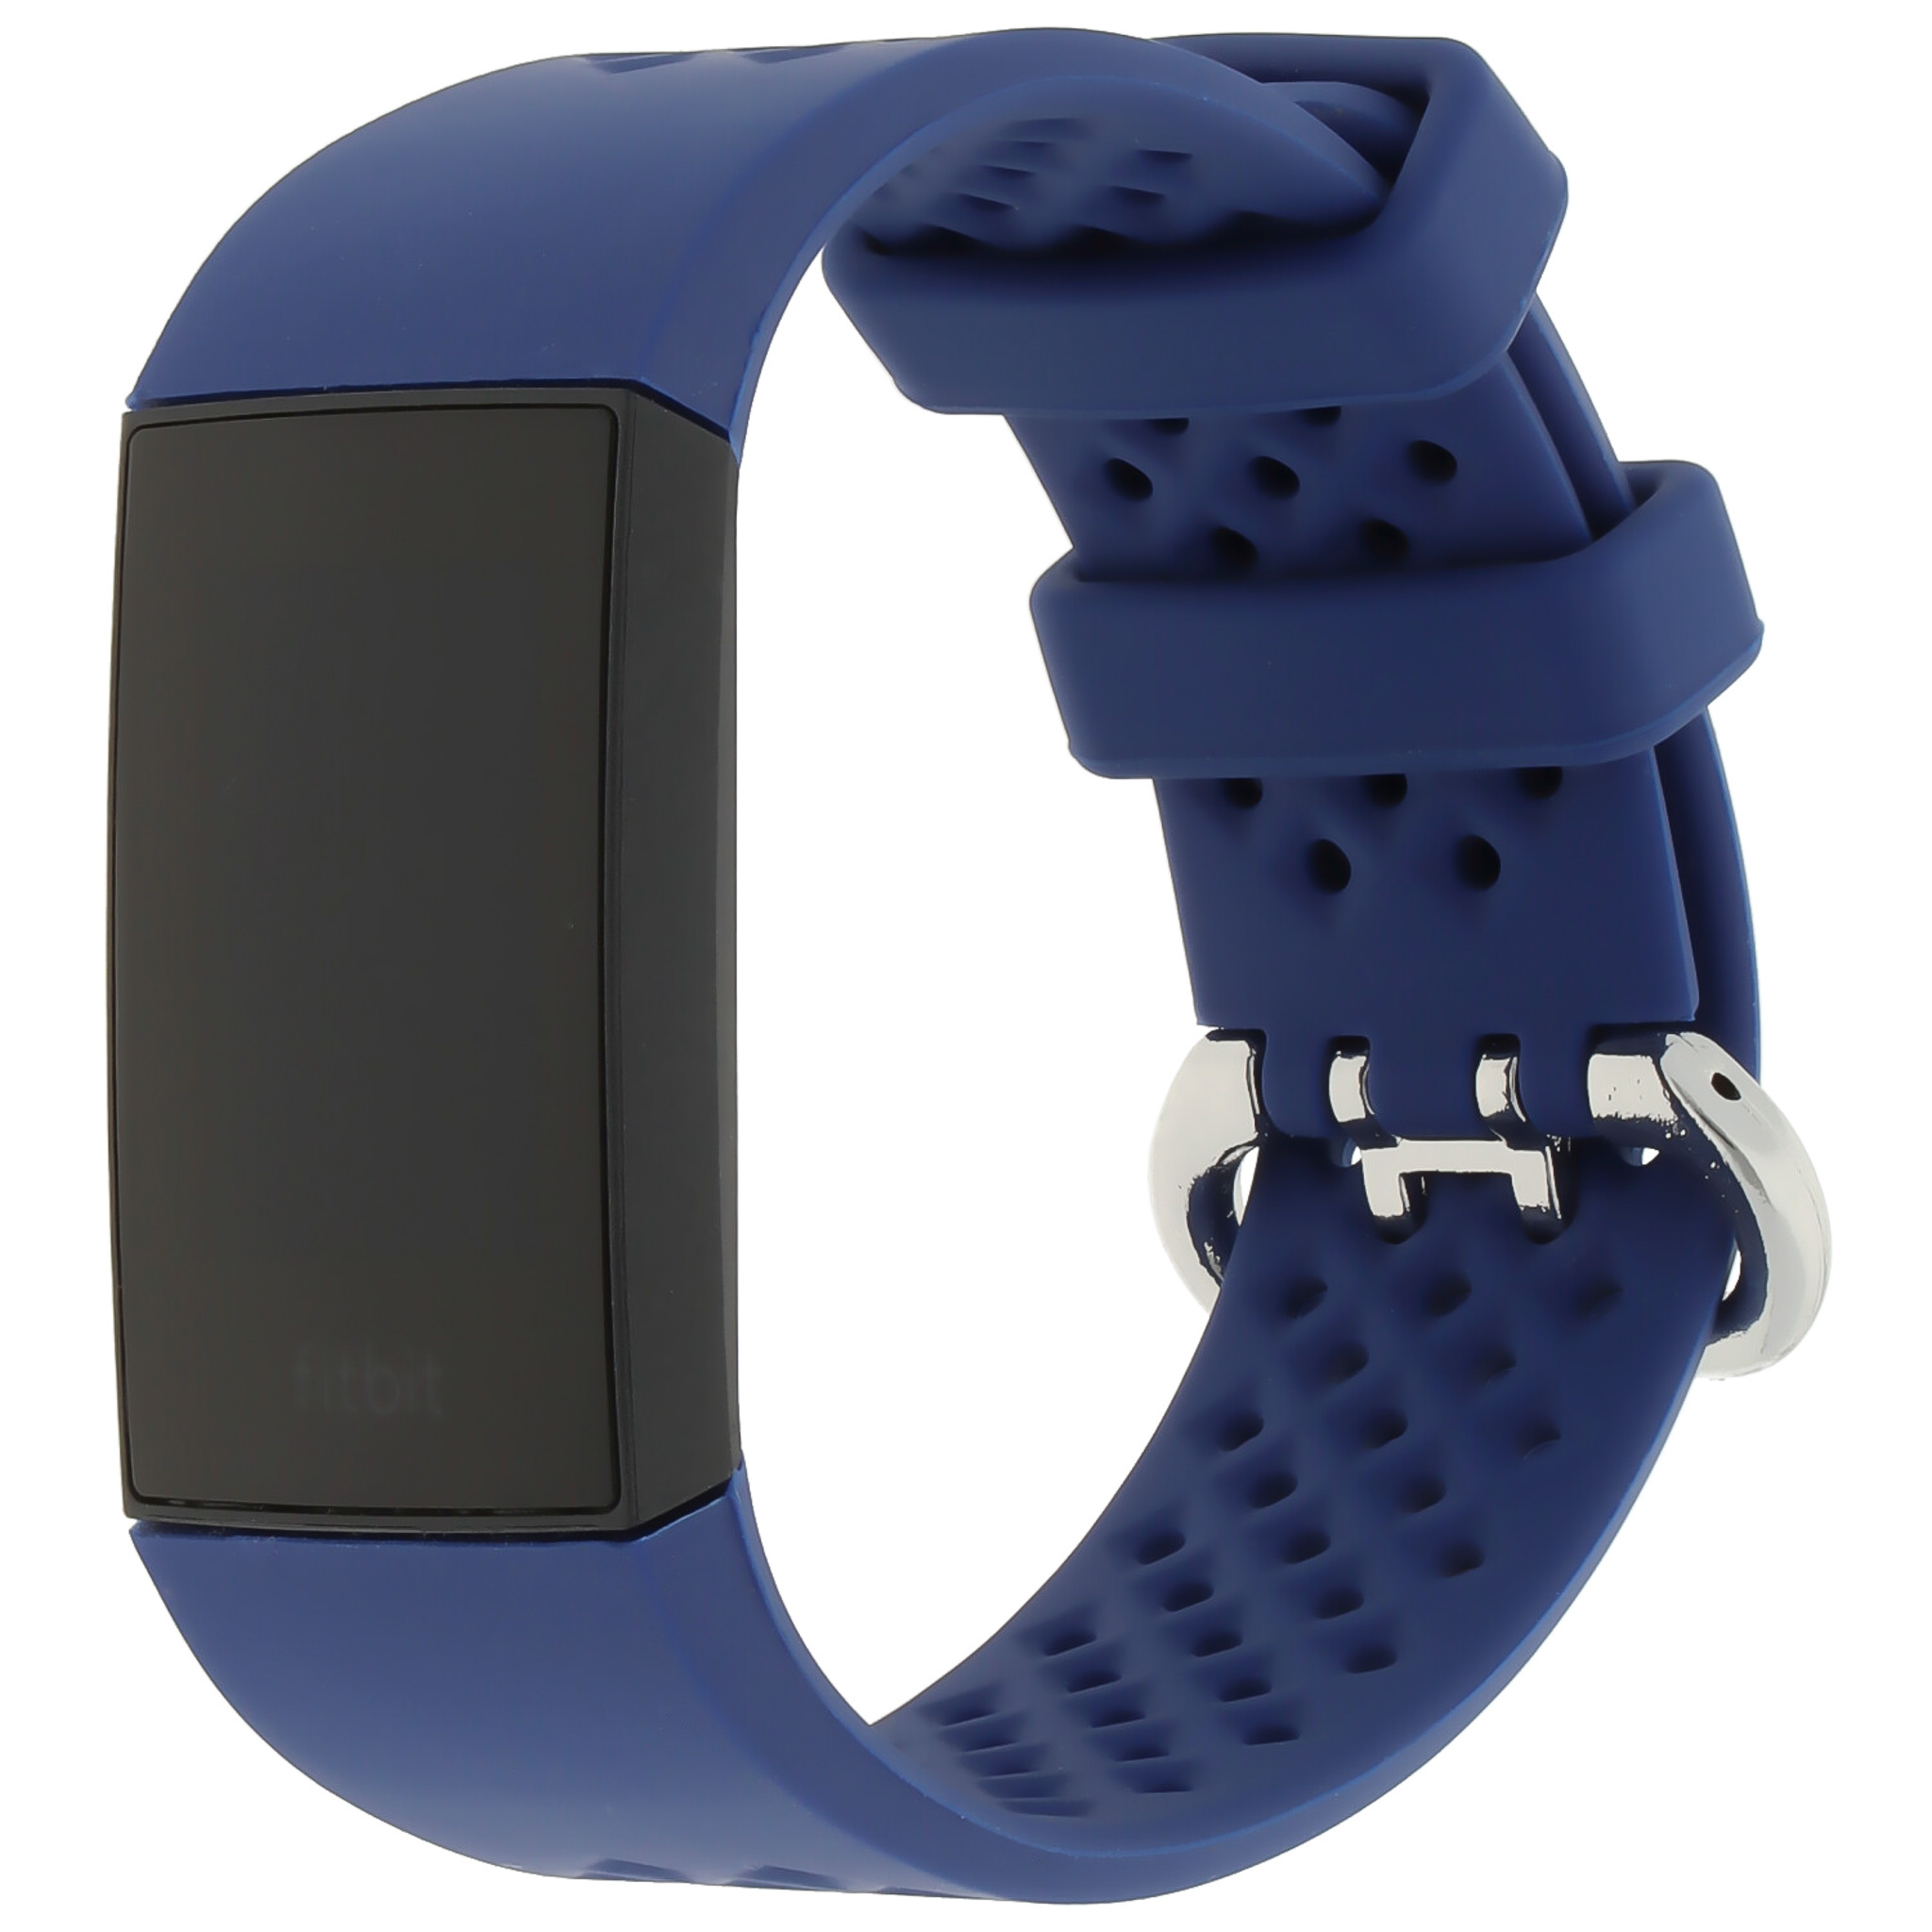 voordelig hoog bleek Goedkope Fitbit charge 3 & 4 sport point band - donkerblauw - 123watches  B.V.